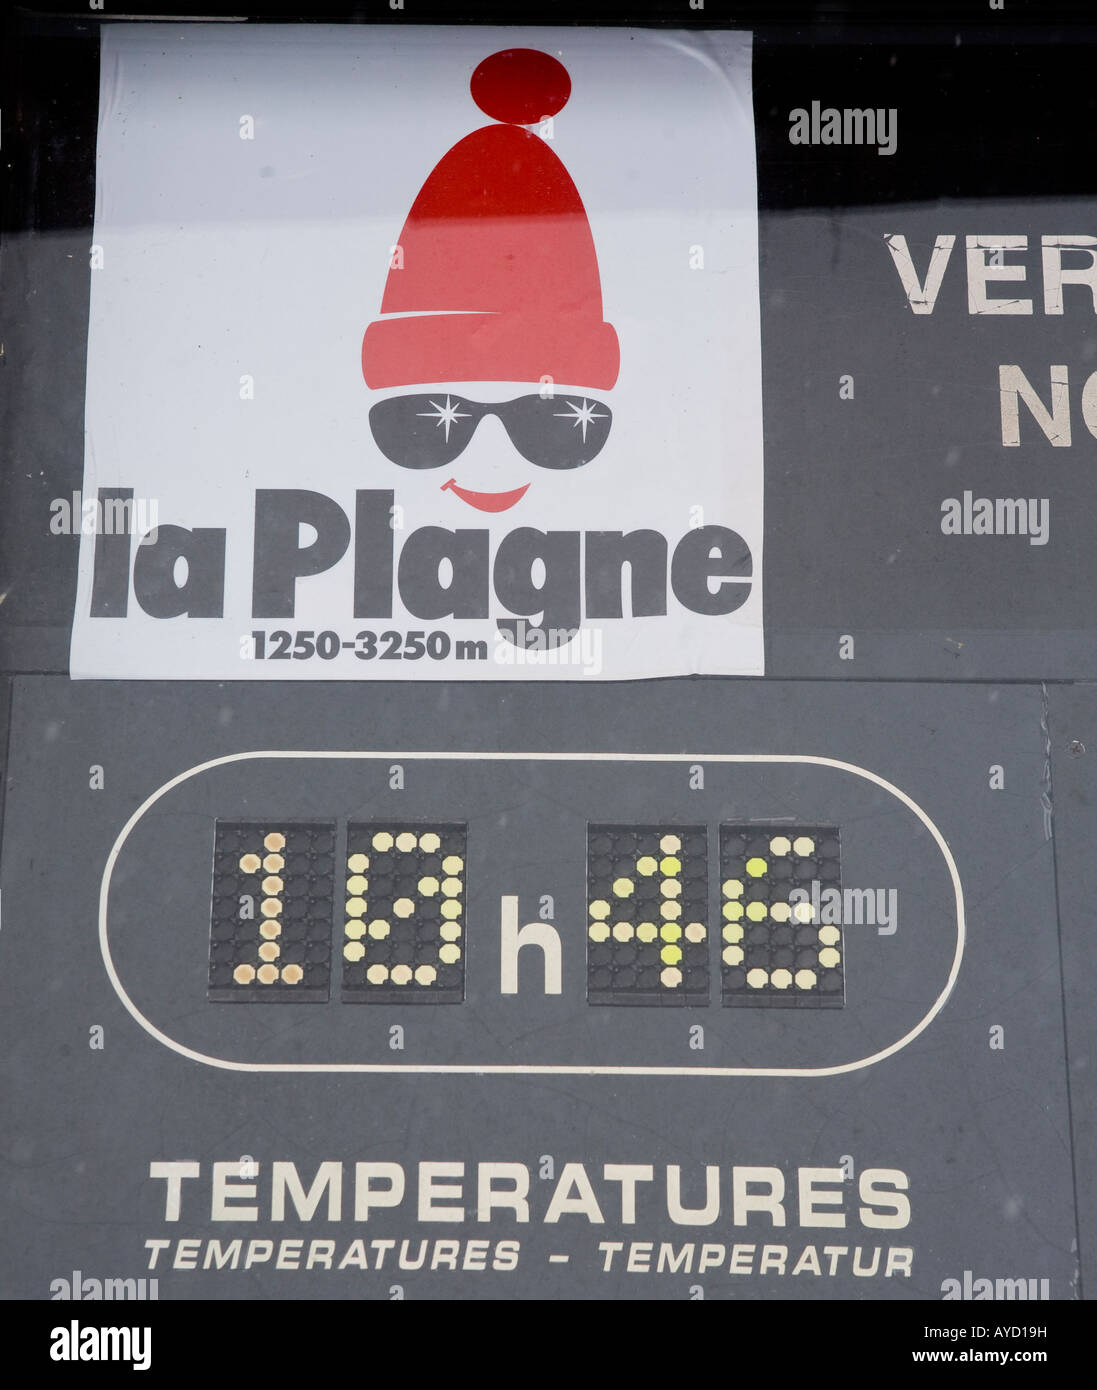 Time In La Plagne Purpose Built Ski Resort French Alps Europe Stock Photo